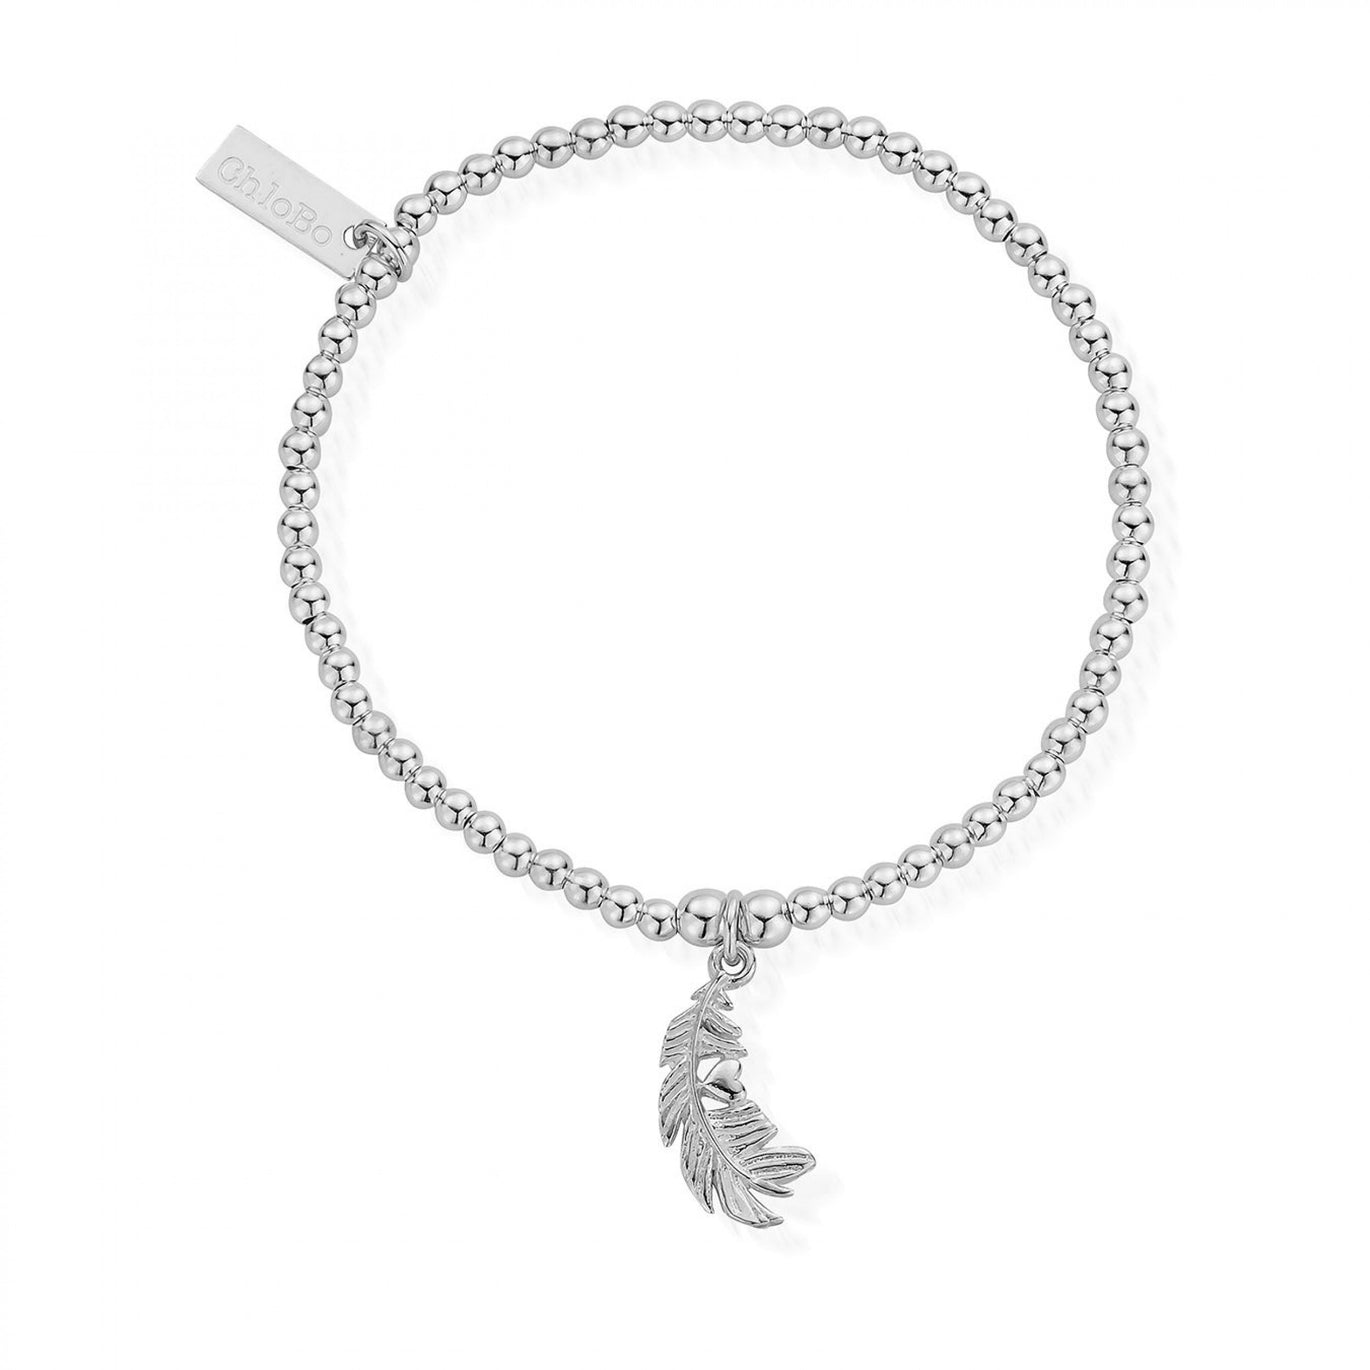 ChloBo Cute Charm Feather Heart Bracelet